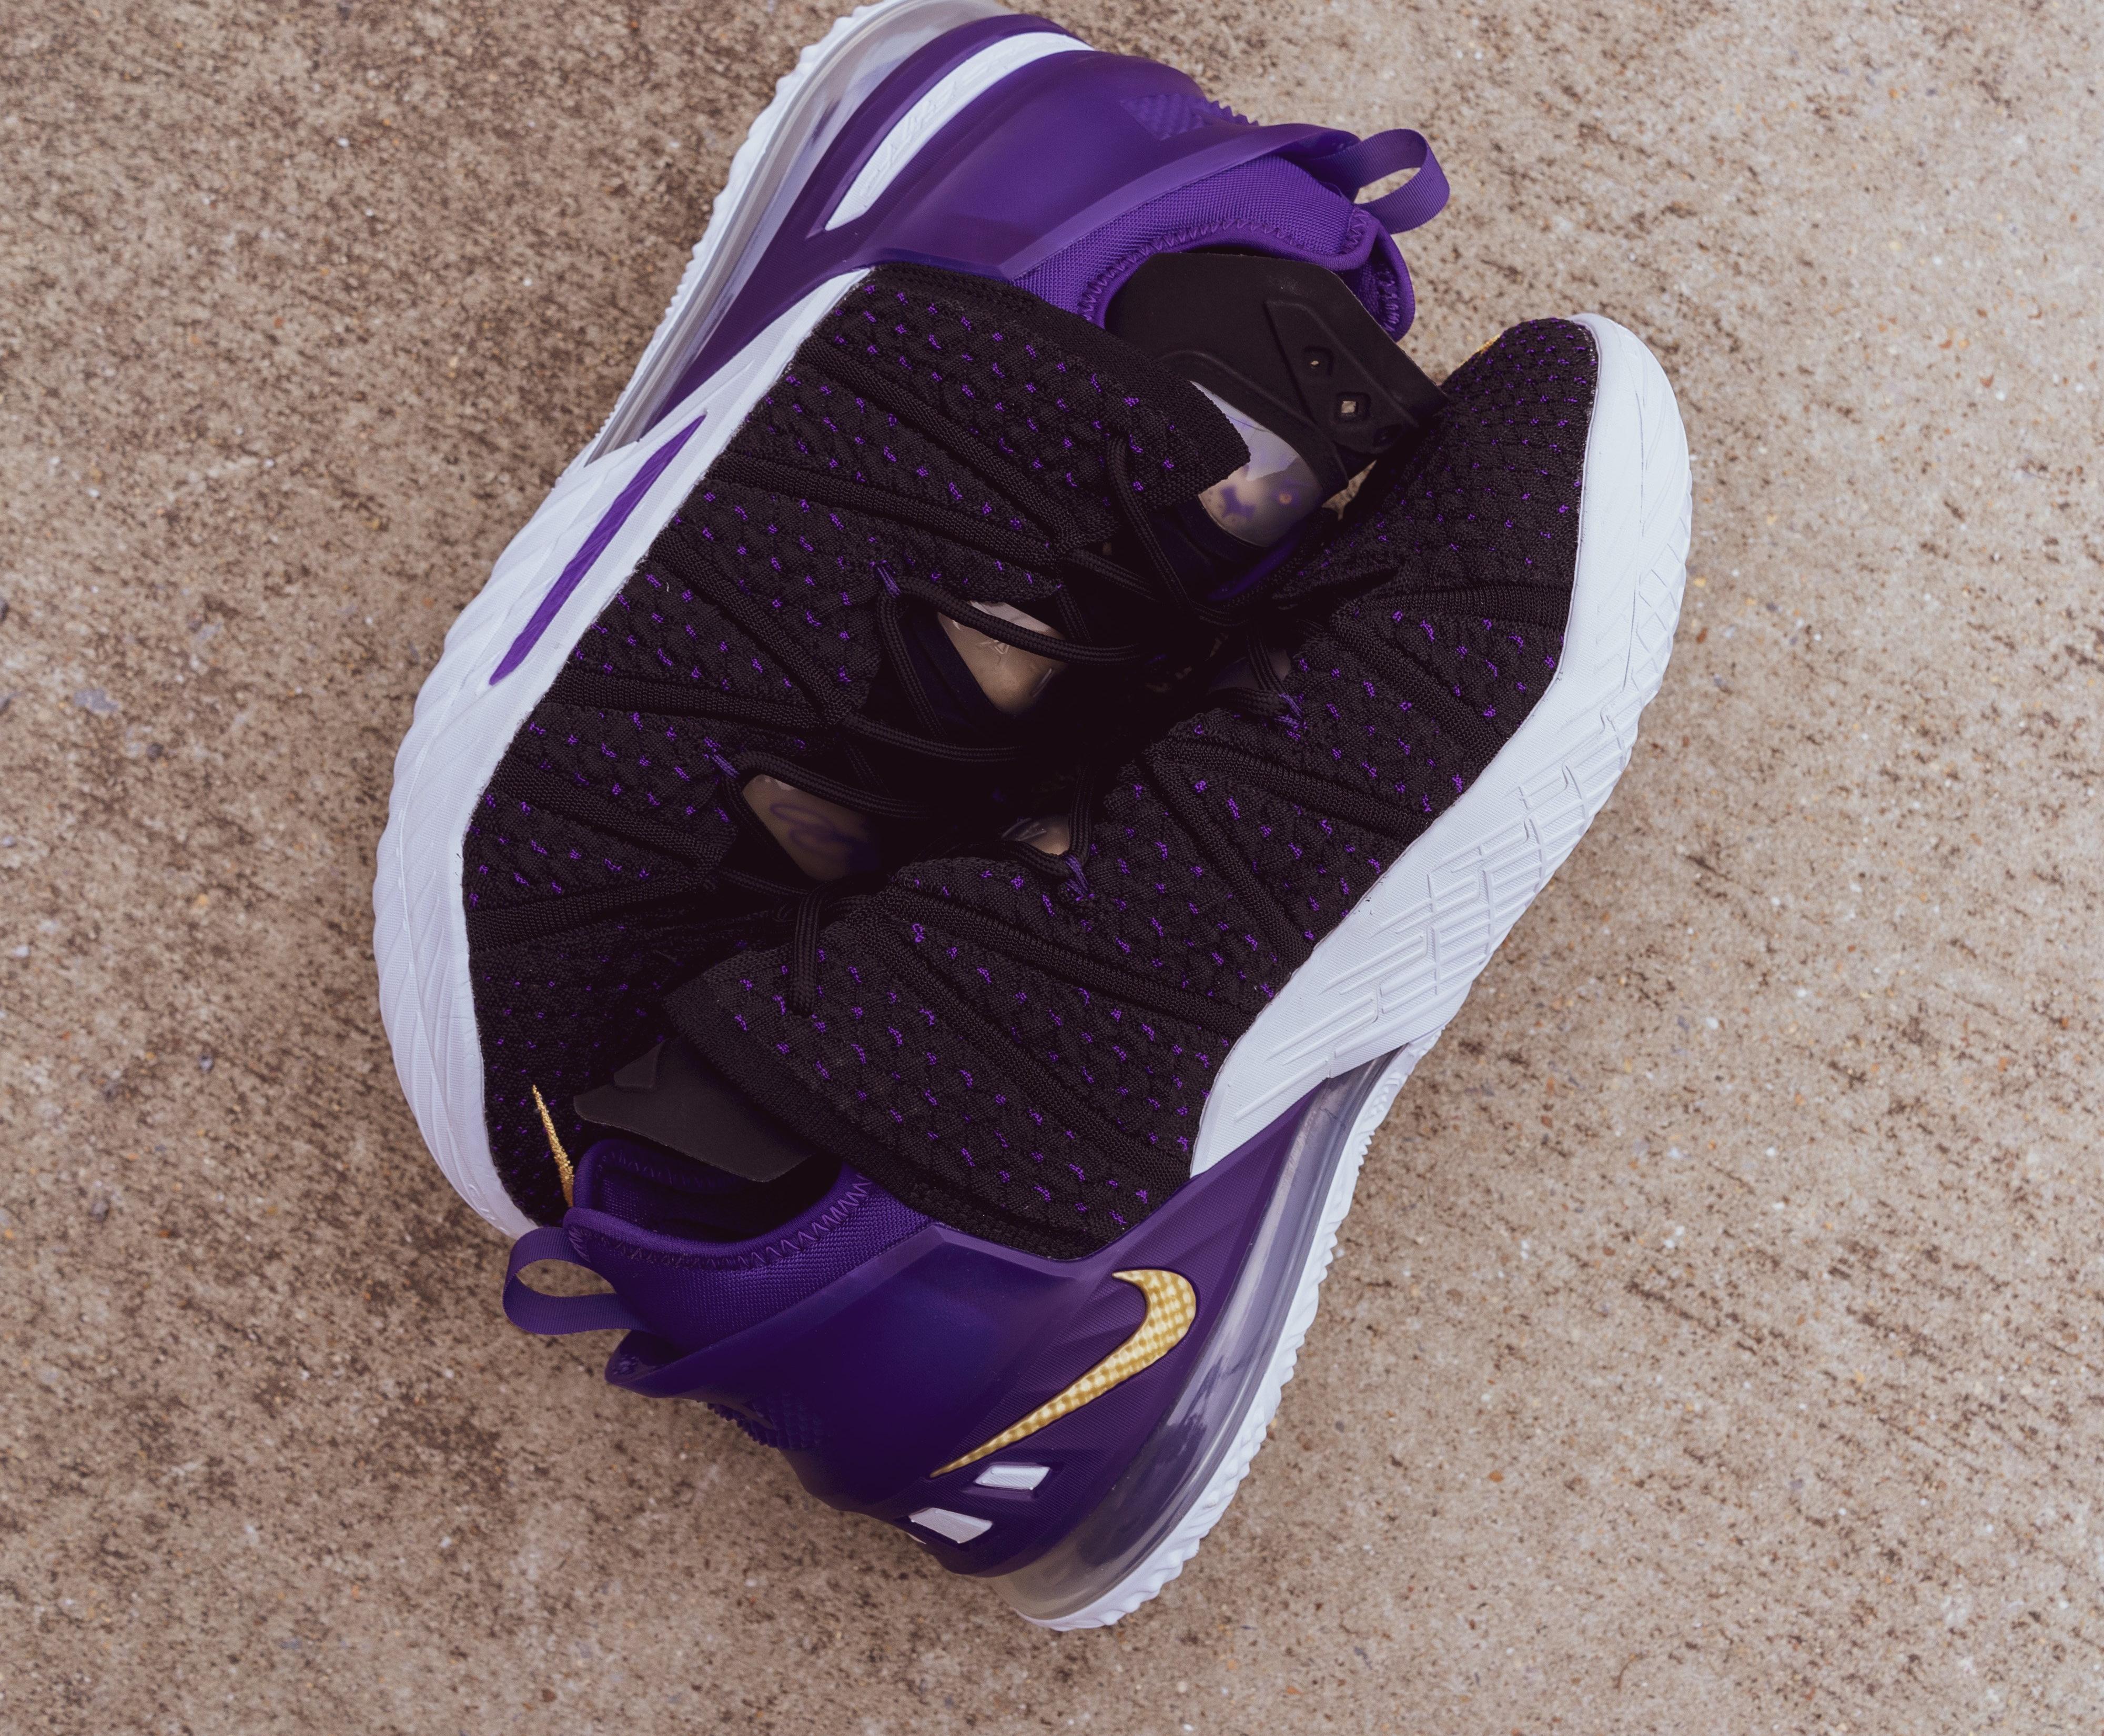 Sneakers Release – Jordan 13 Retro “Black/Court  Purple/White” Men’s & Kids’ Shoes Launching 1/8